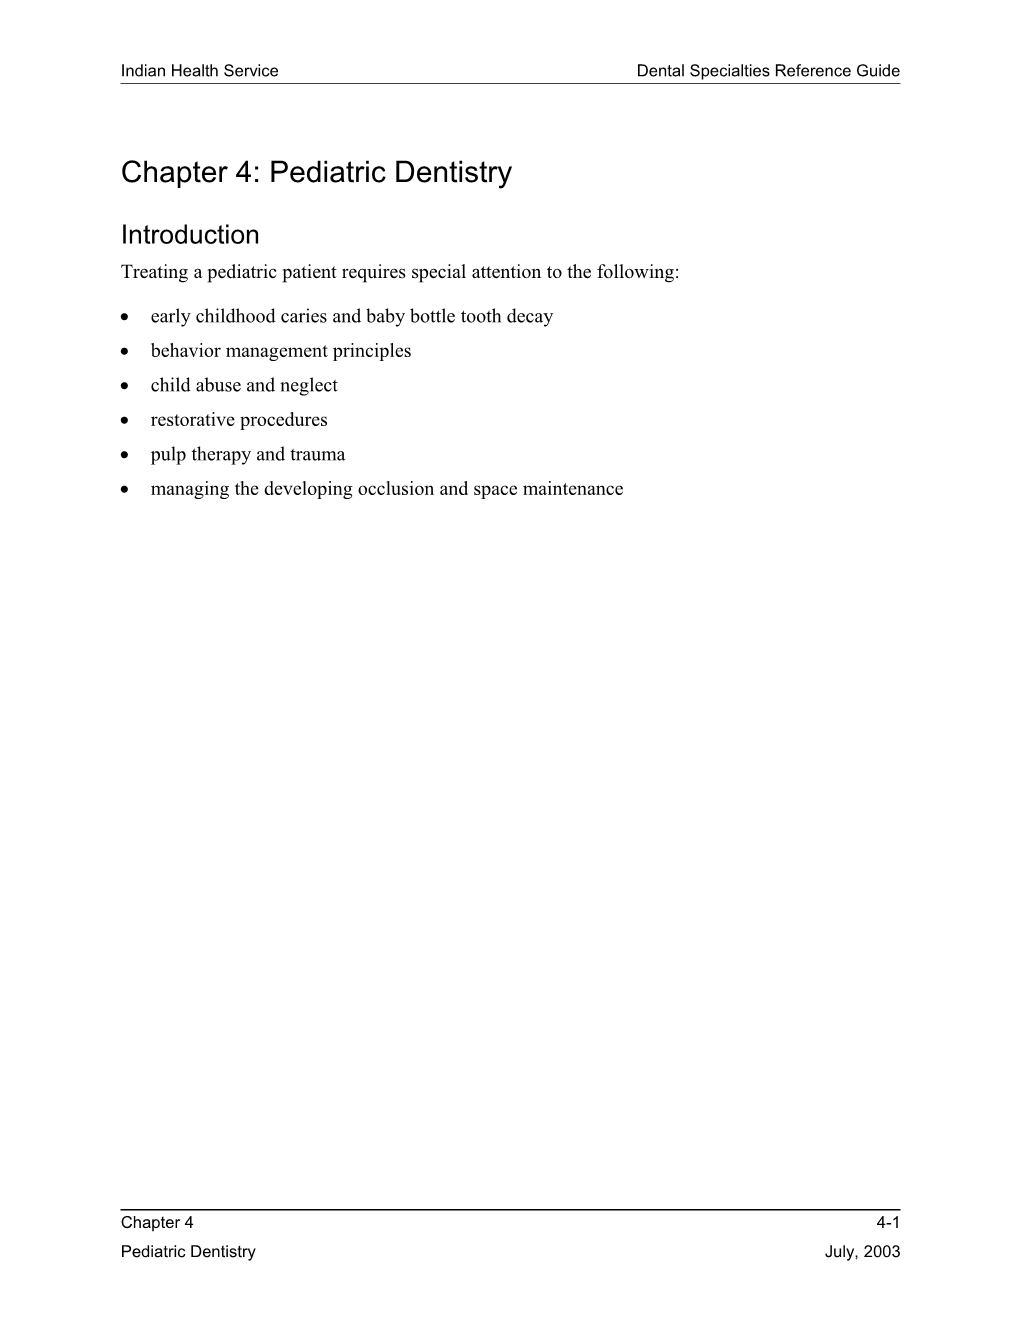 Chapter 4: Pediatric Dentistry